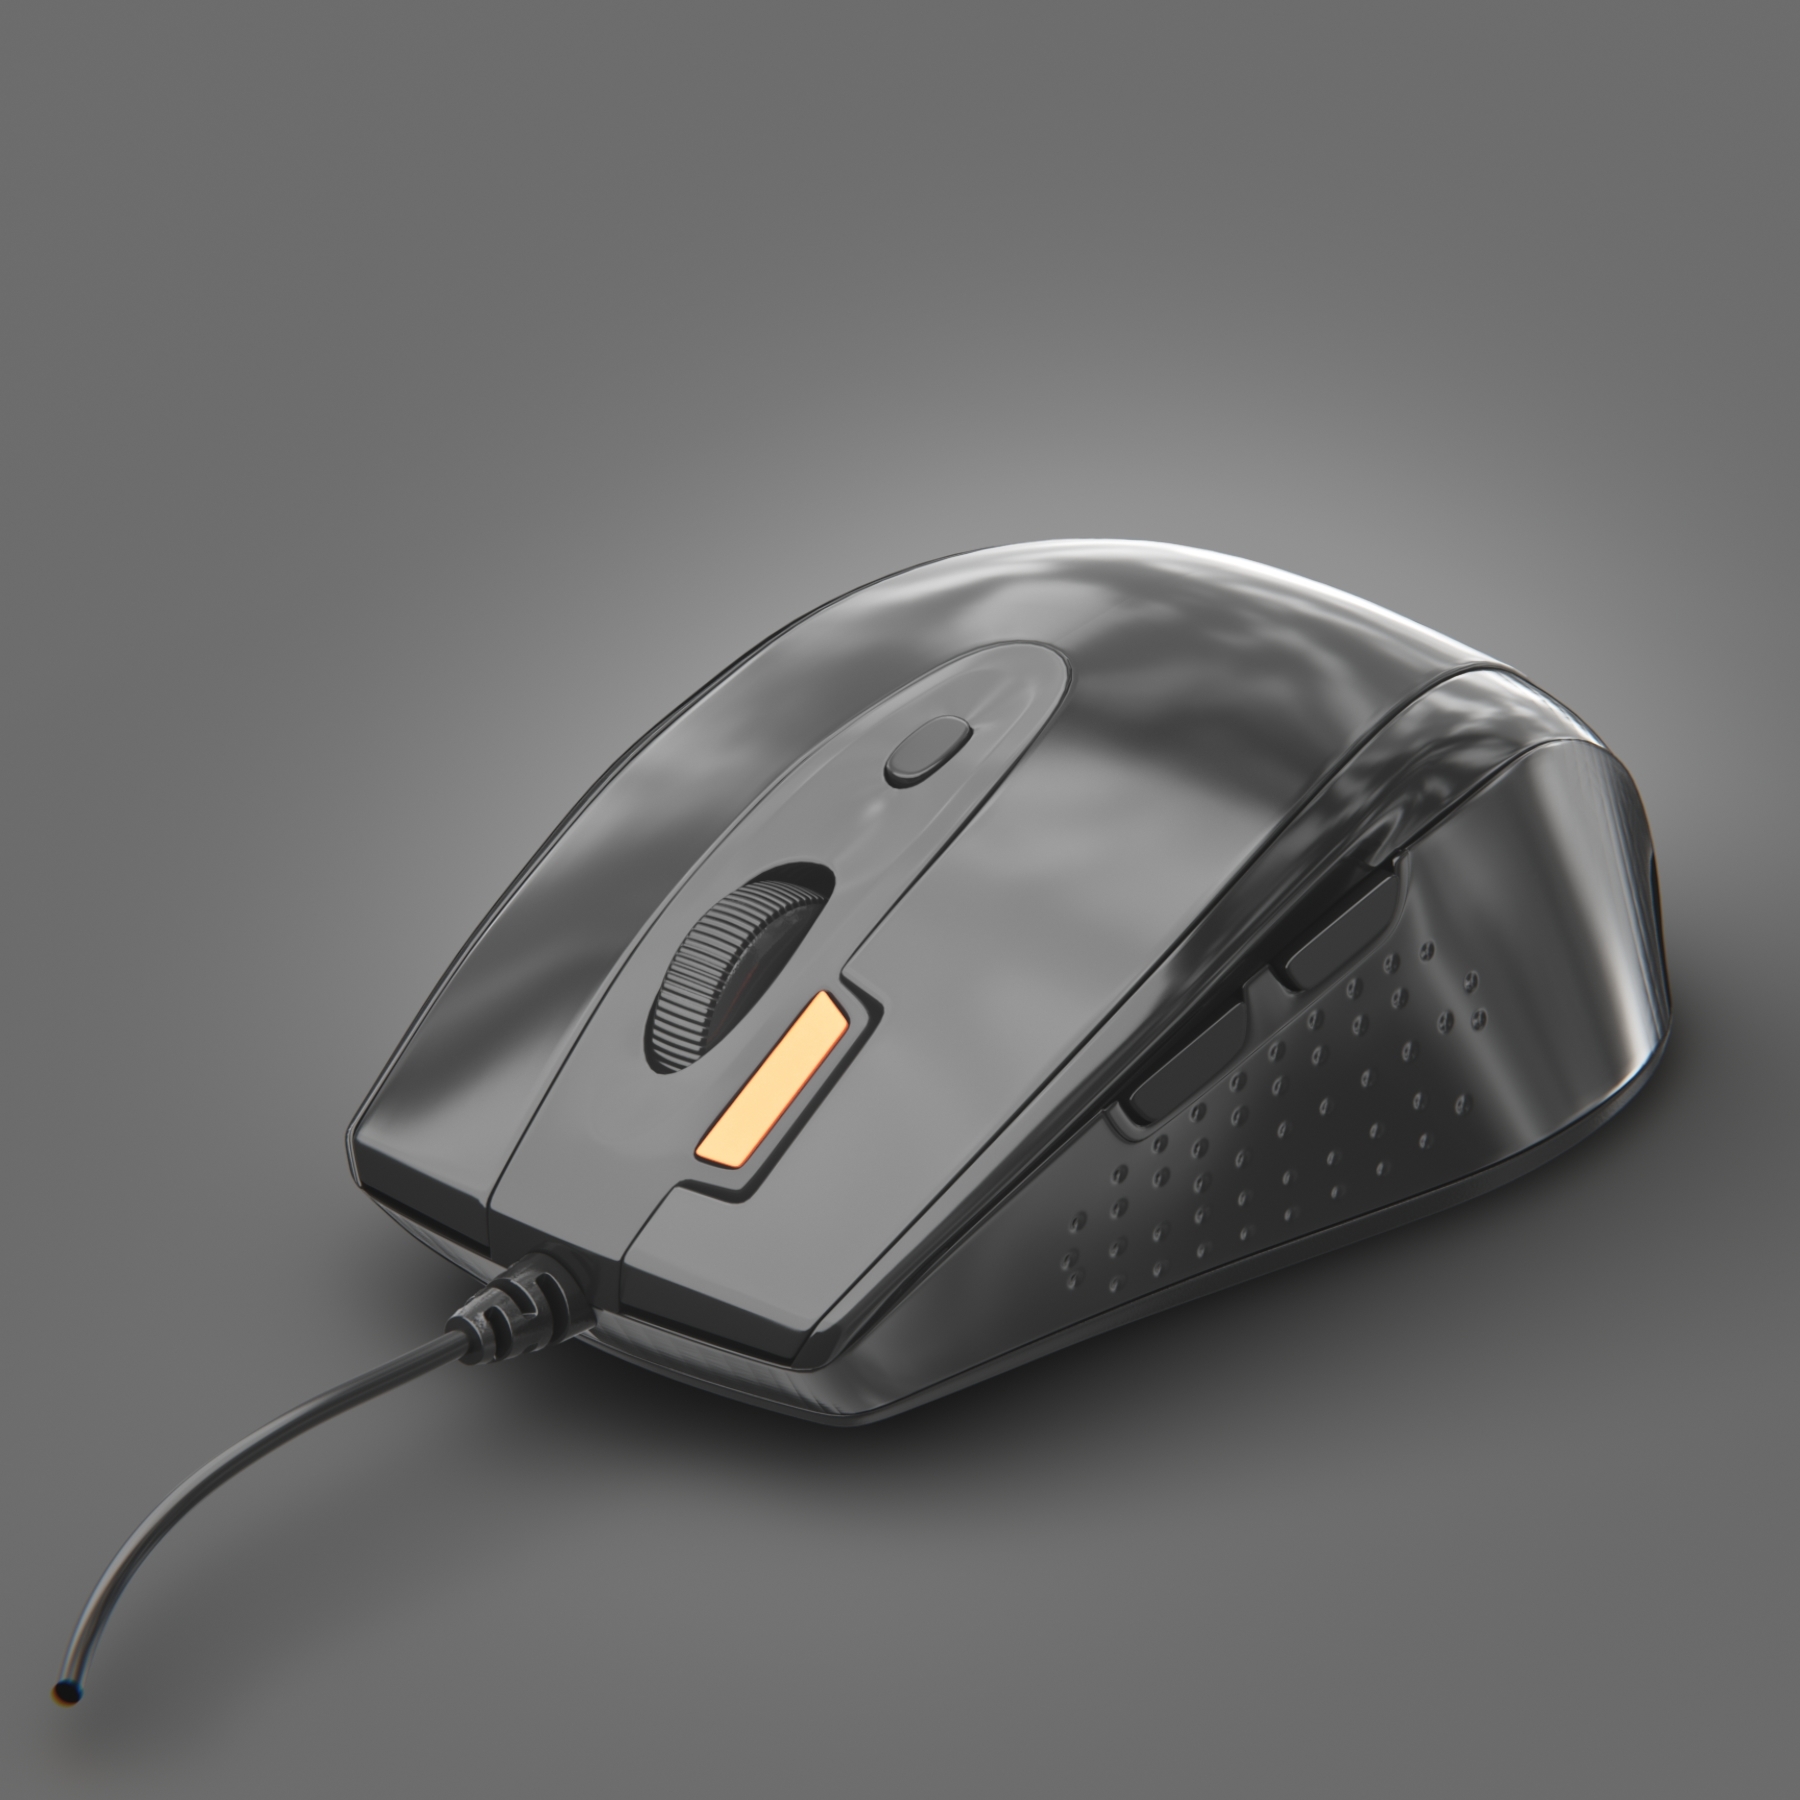 Мышь 9 6. Компьютерная мышь 3ds Max. Мышь компьютерная модель Mice v9. Мышь для 3ds Max. Mouse Computer x6 70d.